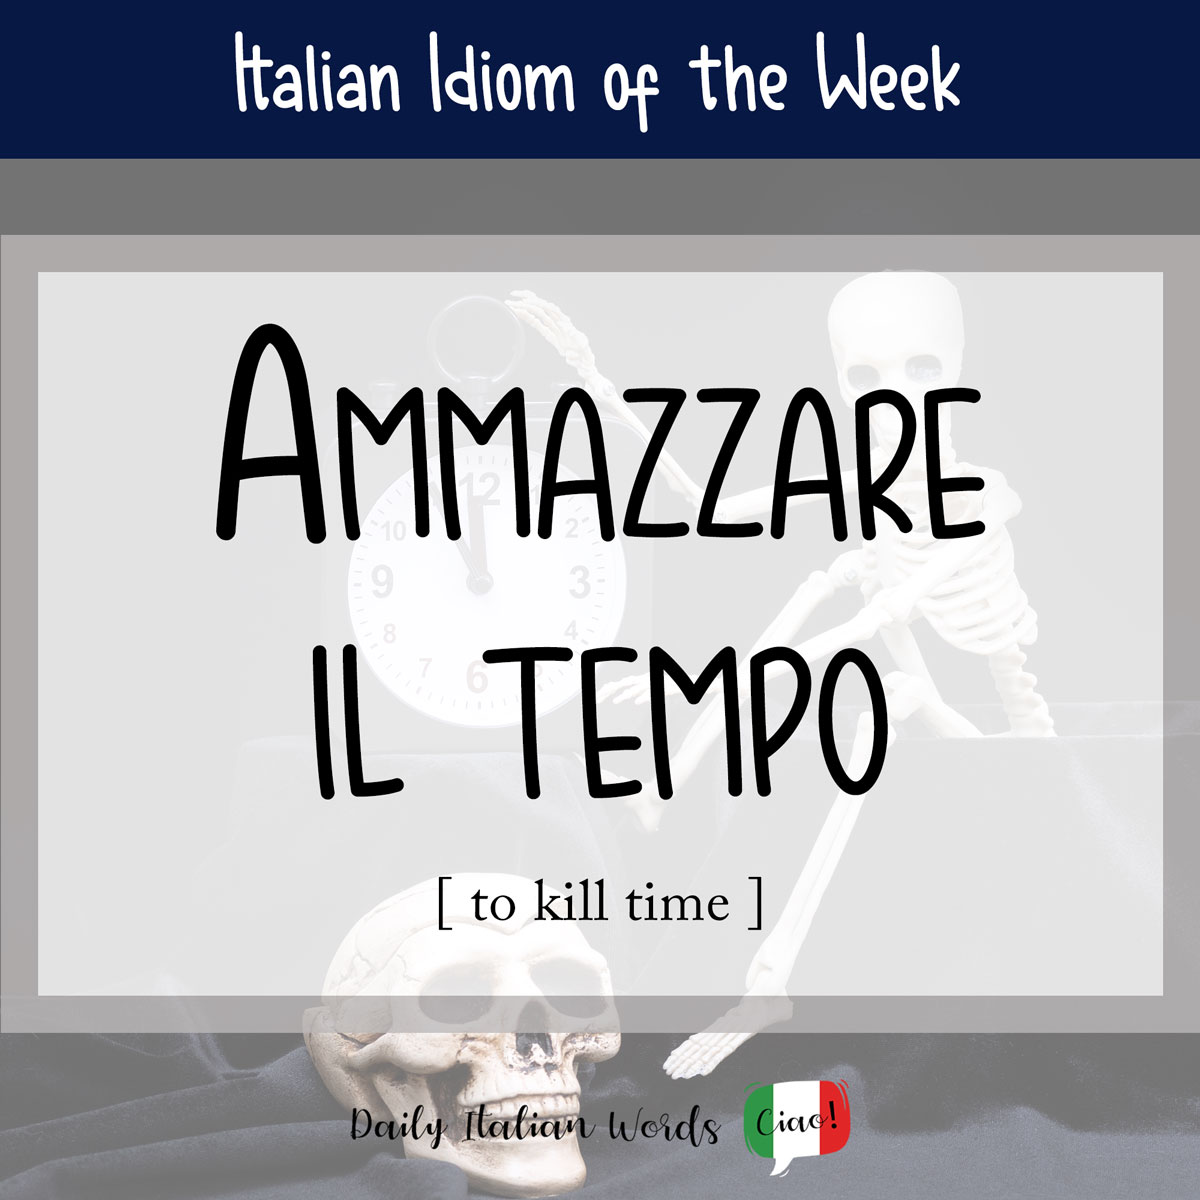 Italian proverb: killing time